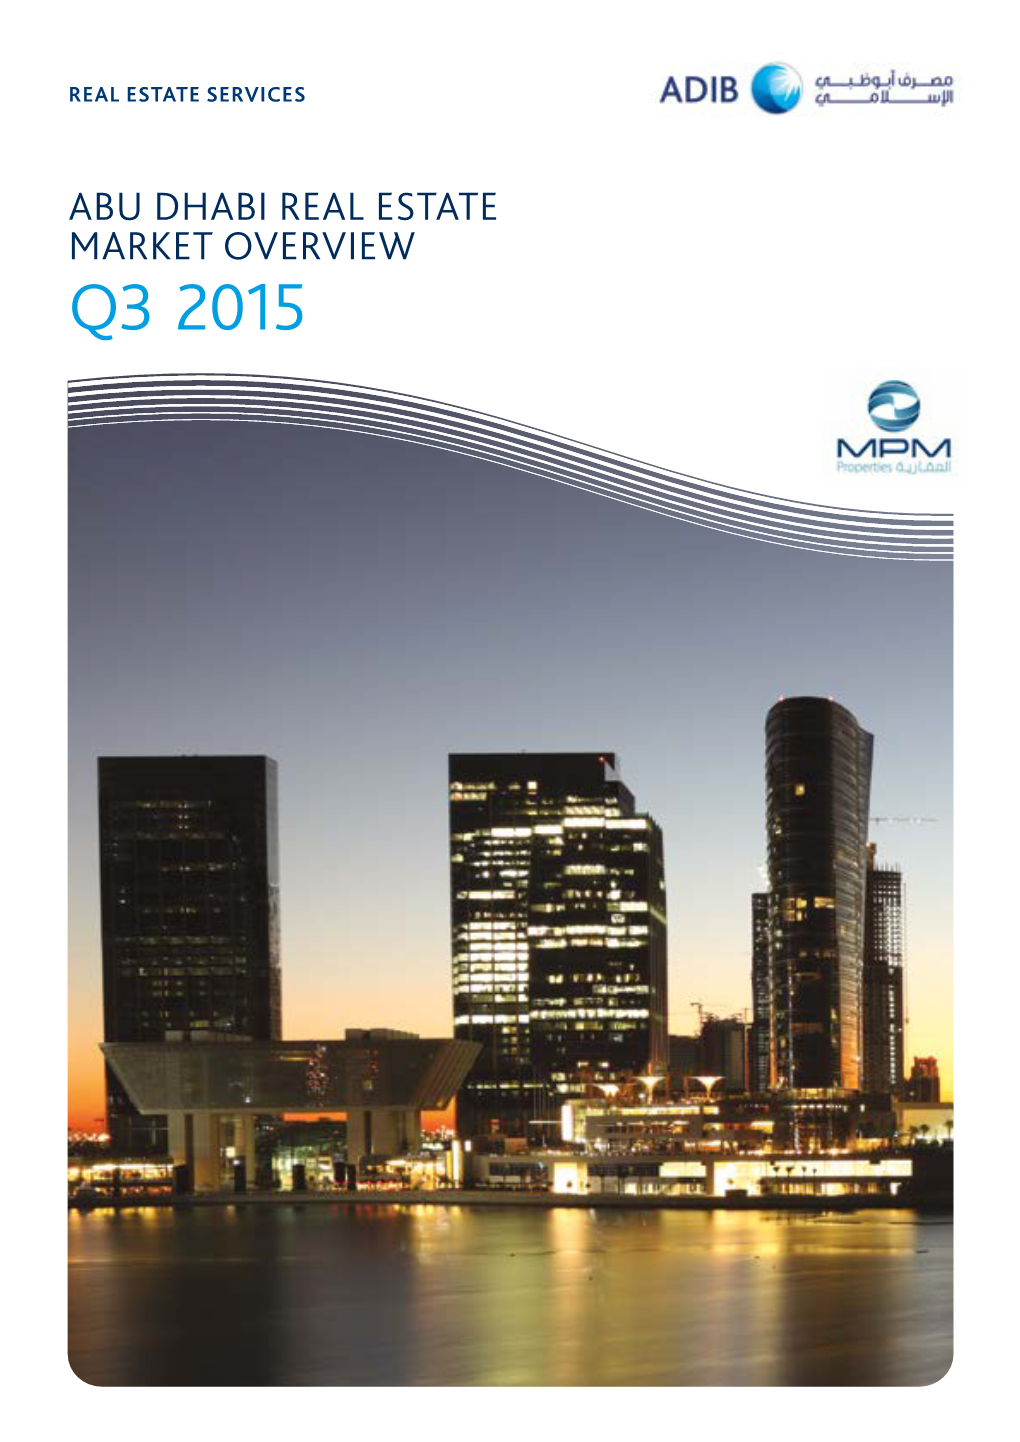 Q3 2015 Q3 2015 Rental Index | Abu Dhabi Real Estate Market Overview Rental Index | Abu Dhabi Real Estate Market Overview Q3 2015